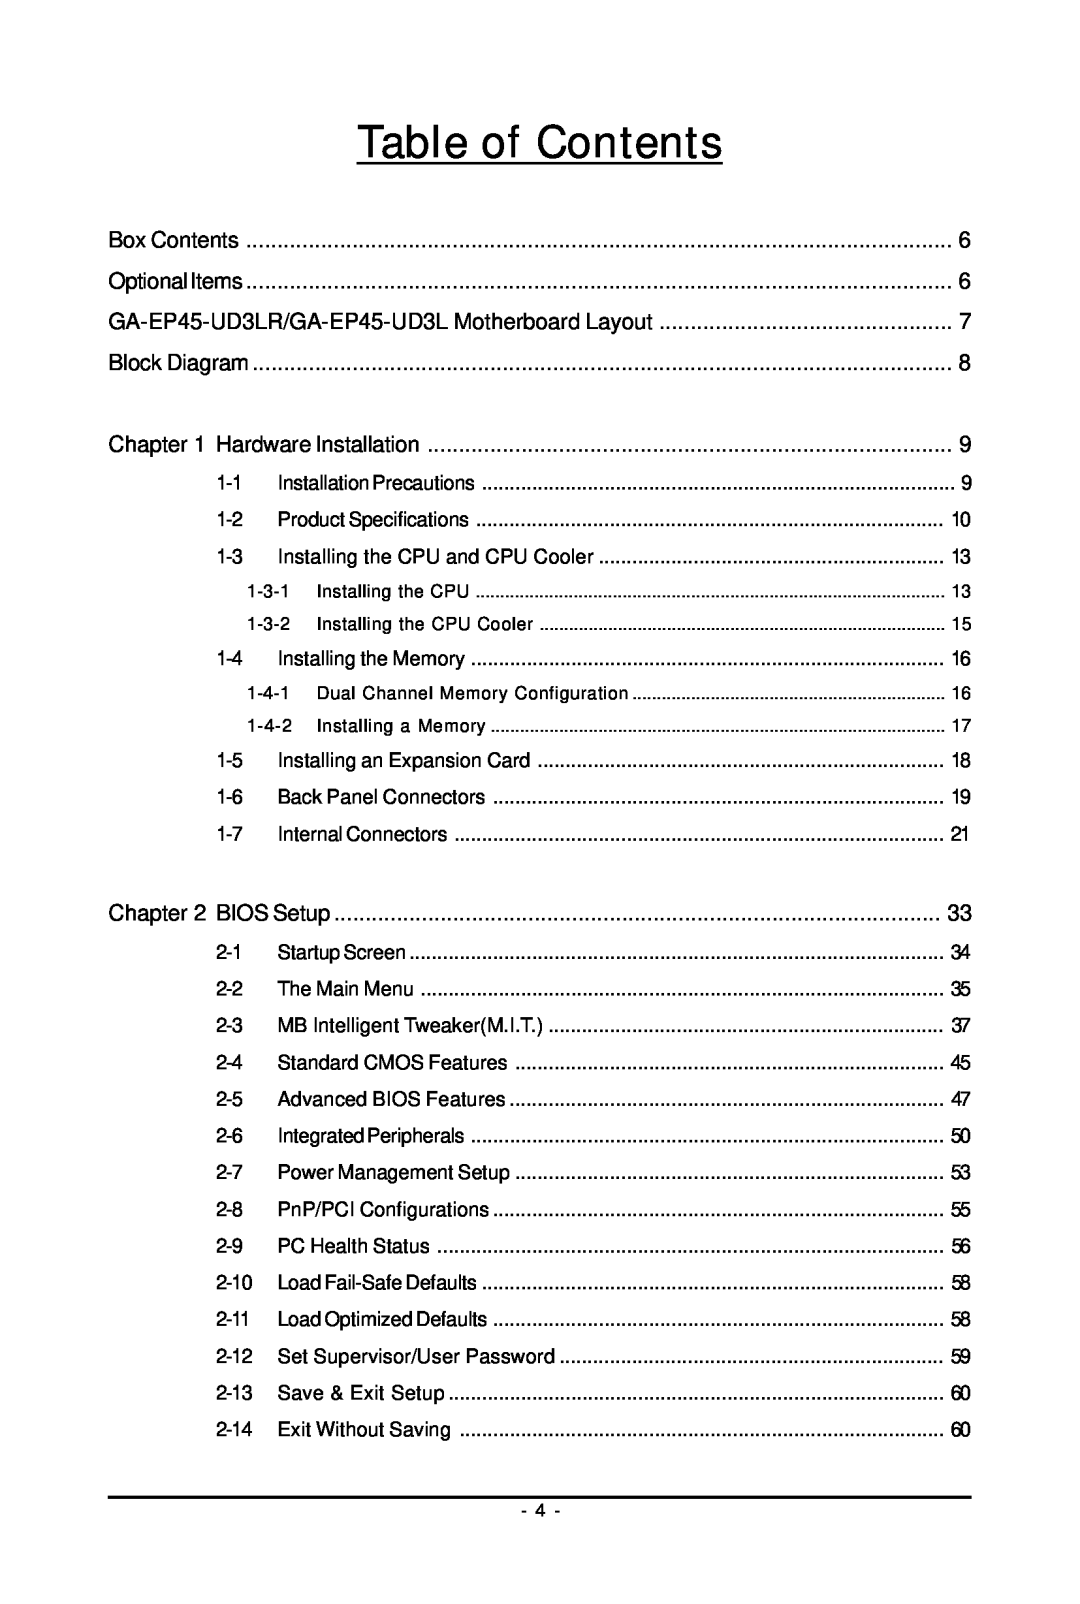 Gigabyte user manual Table of Contents, GA-EP45-UD3LR/GA-EP45-UD3L Motherboard Layout, 1-3-1, 1-4-1, 1-4-2 